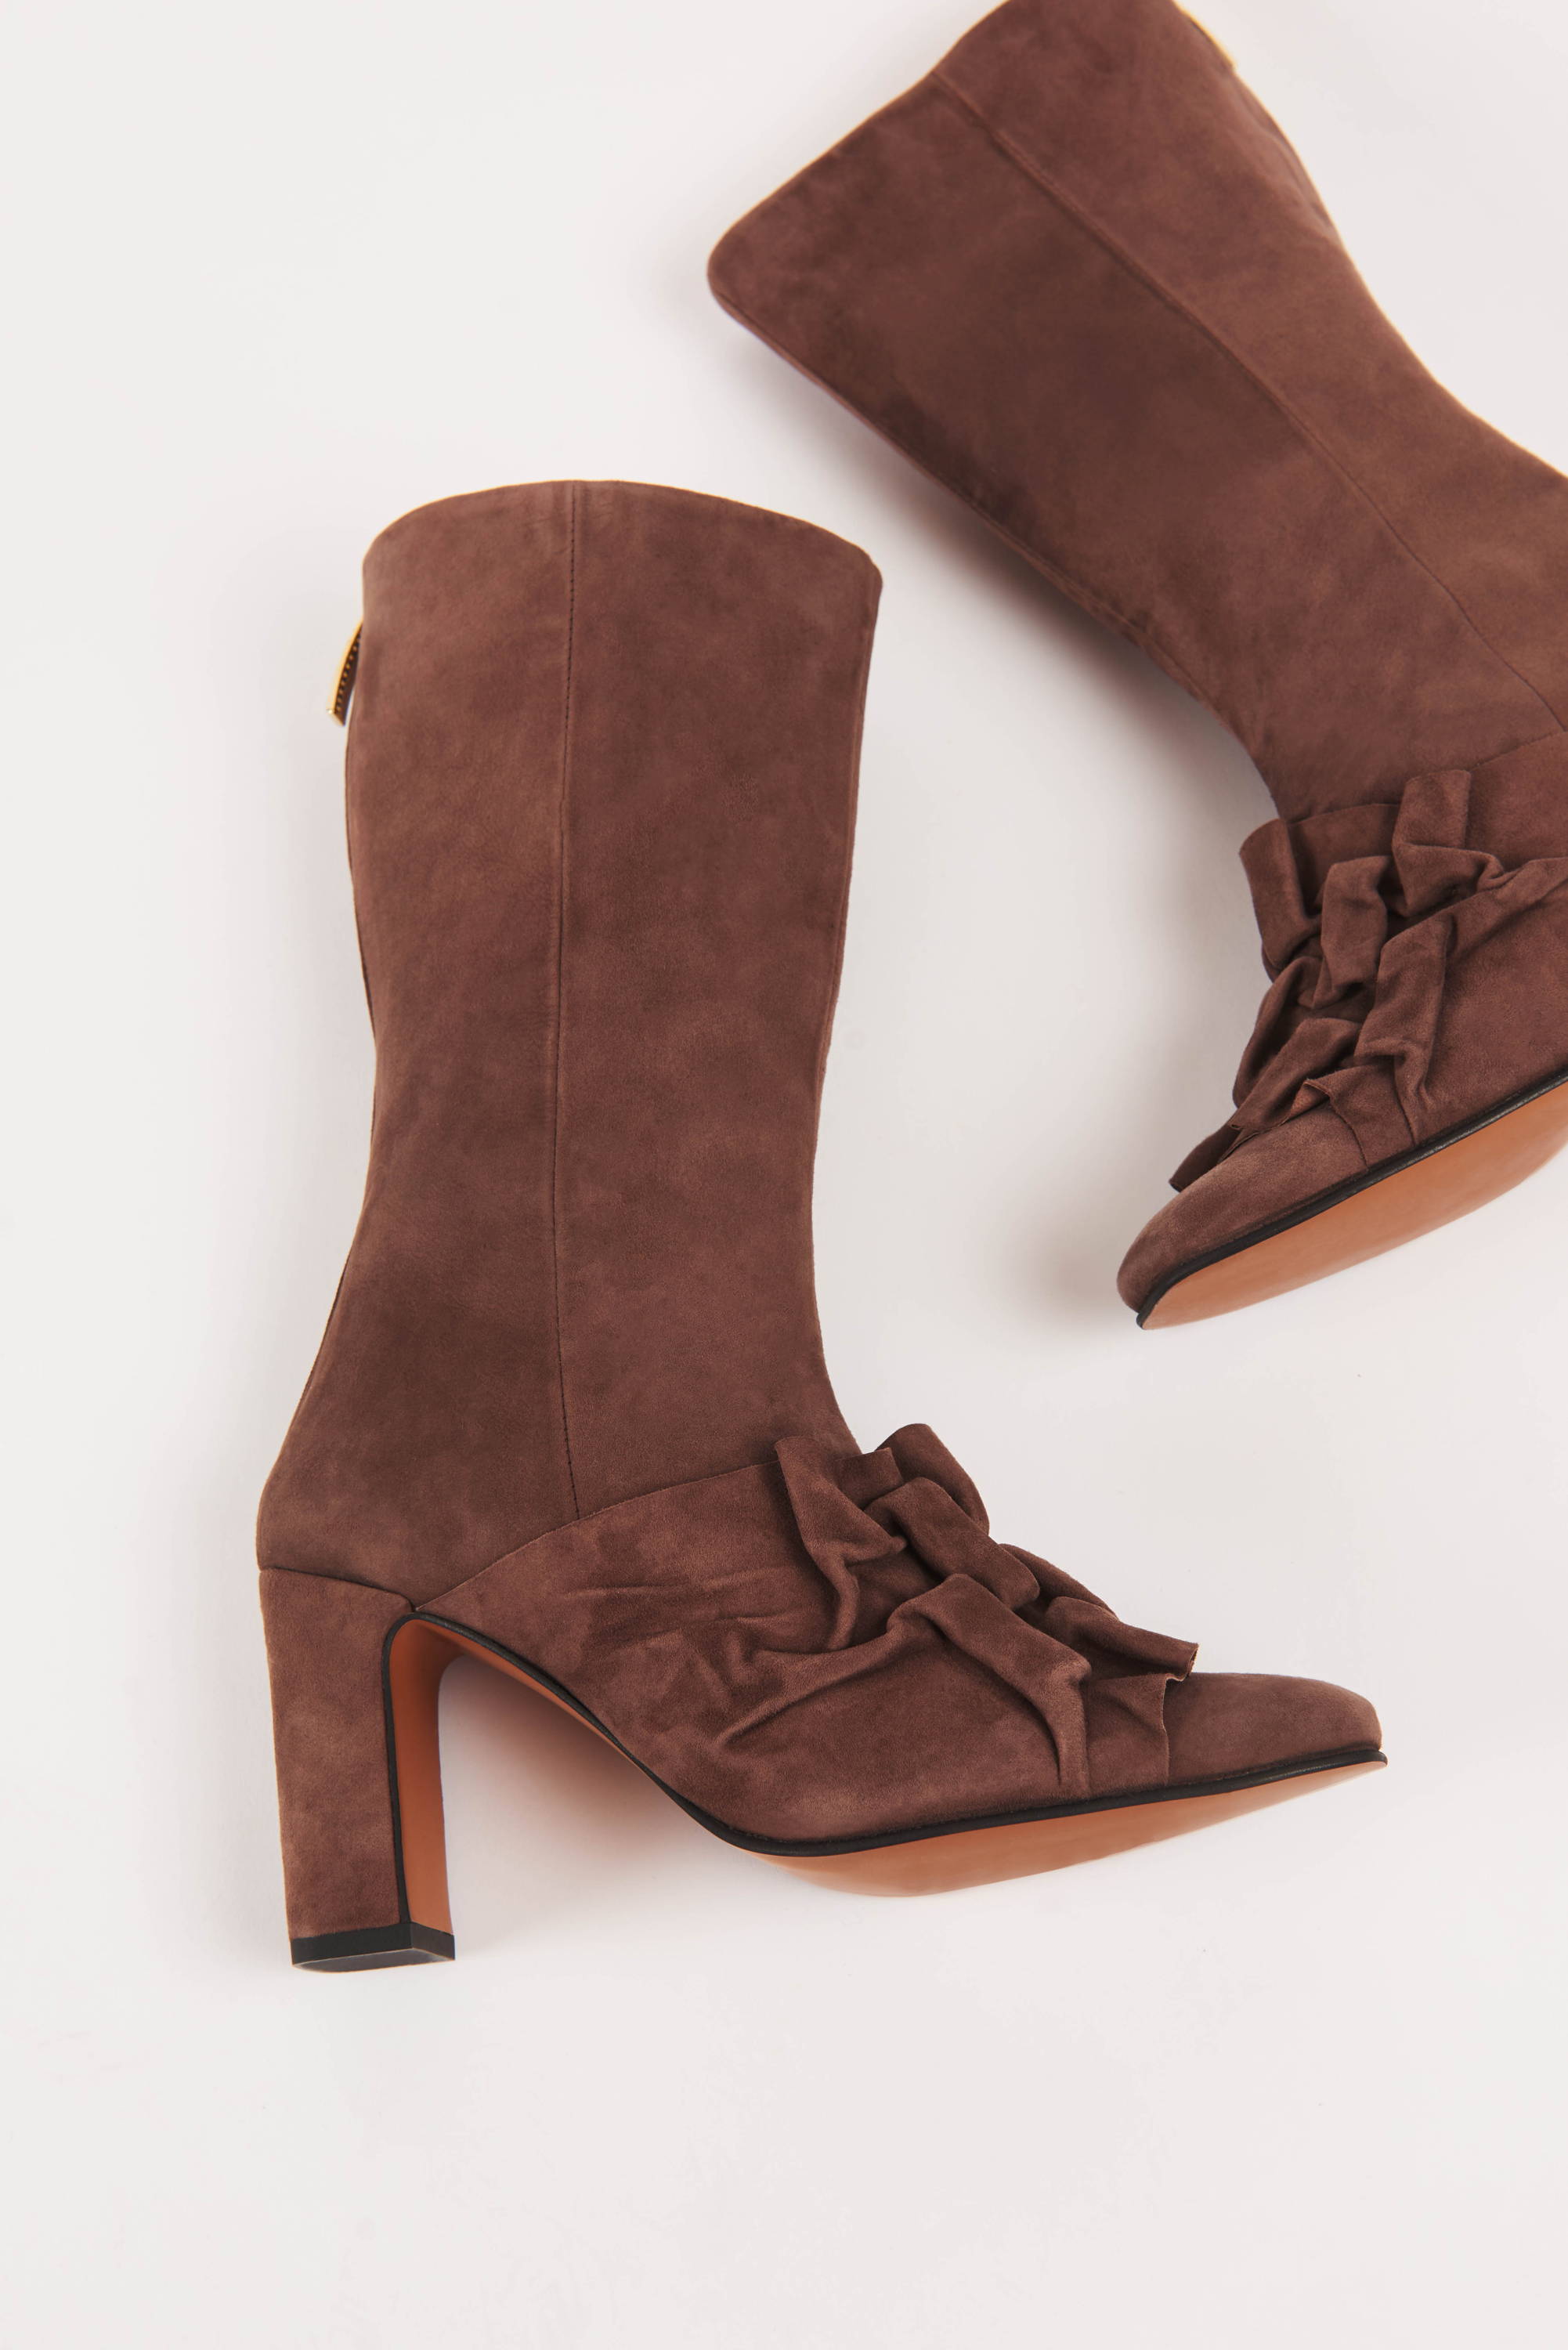 Pair of Vandrelaar brown suede Greta ankle high-heel boot with canadian smocking detail and brown sole